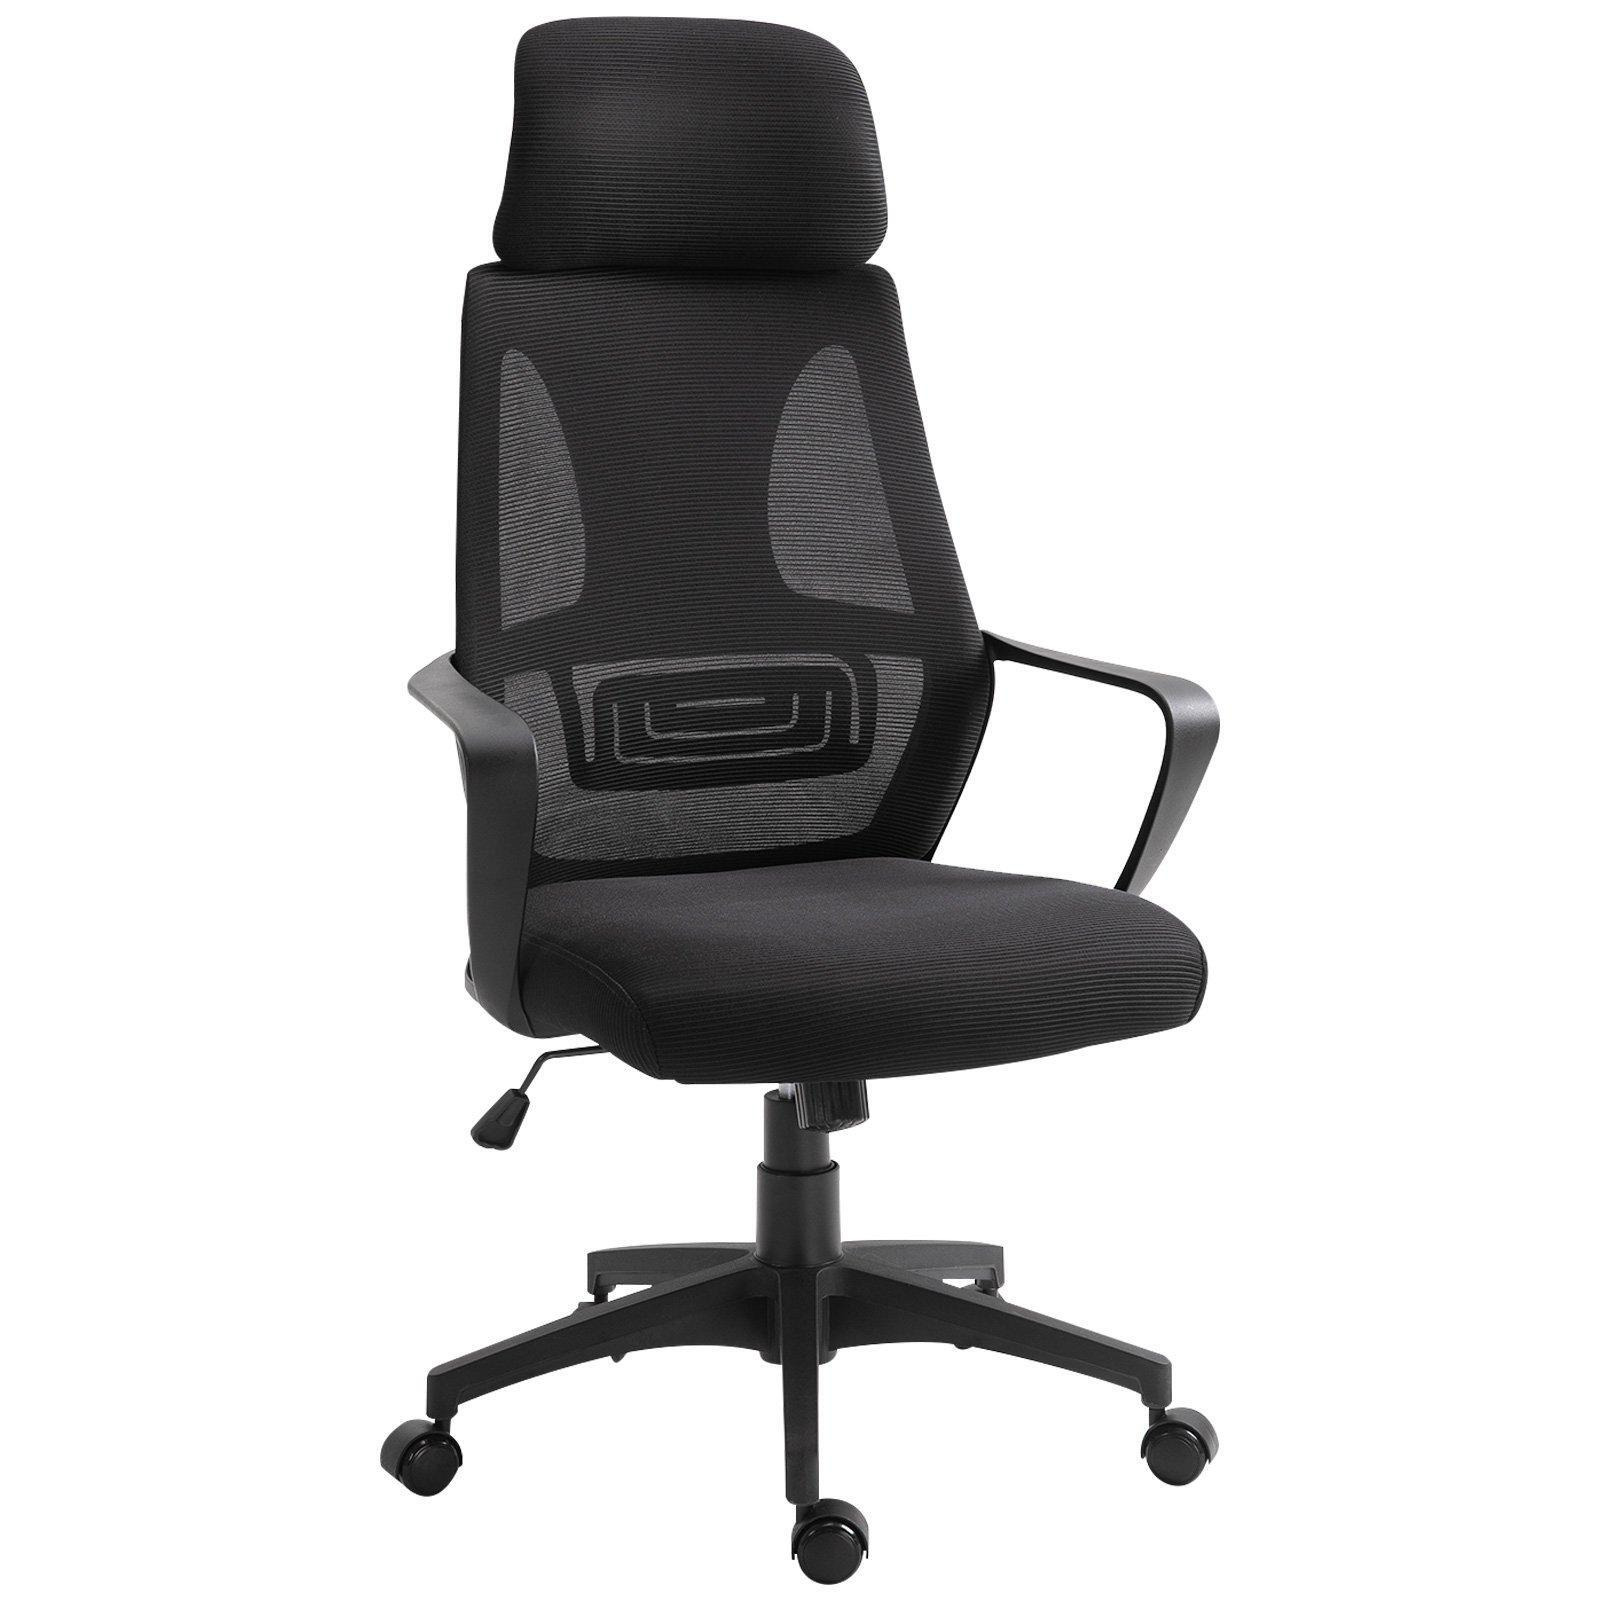 Mesh Fabric Desk Chair Swivel Chair High Backrest Adjustable Height - image 1